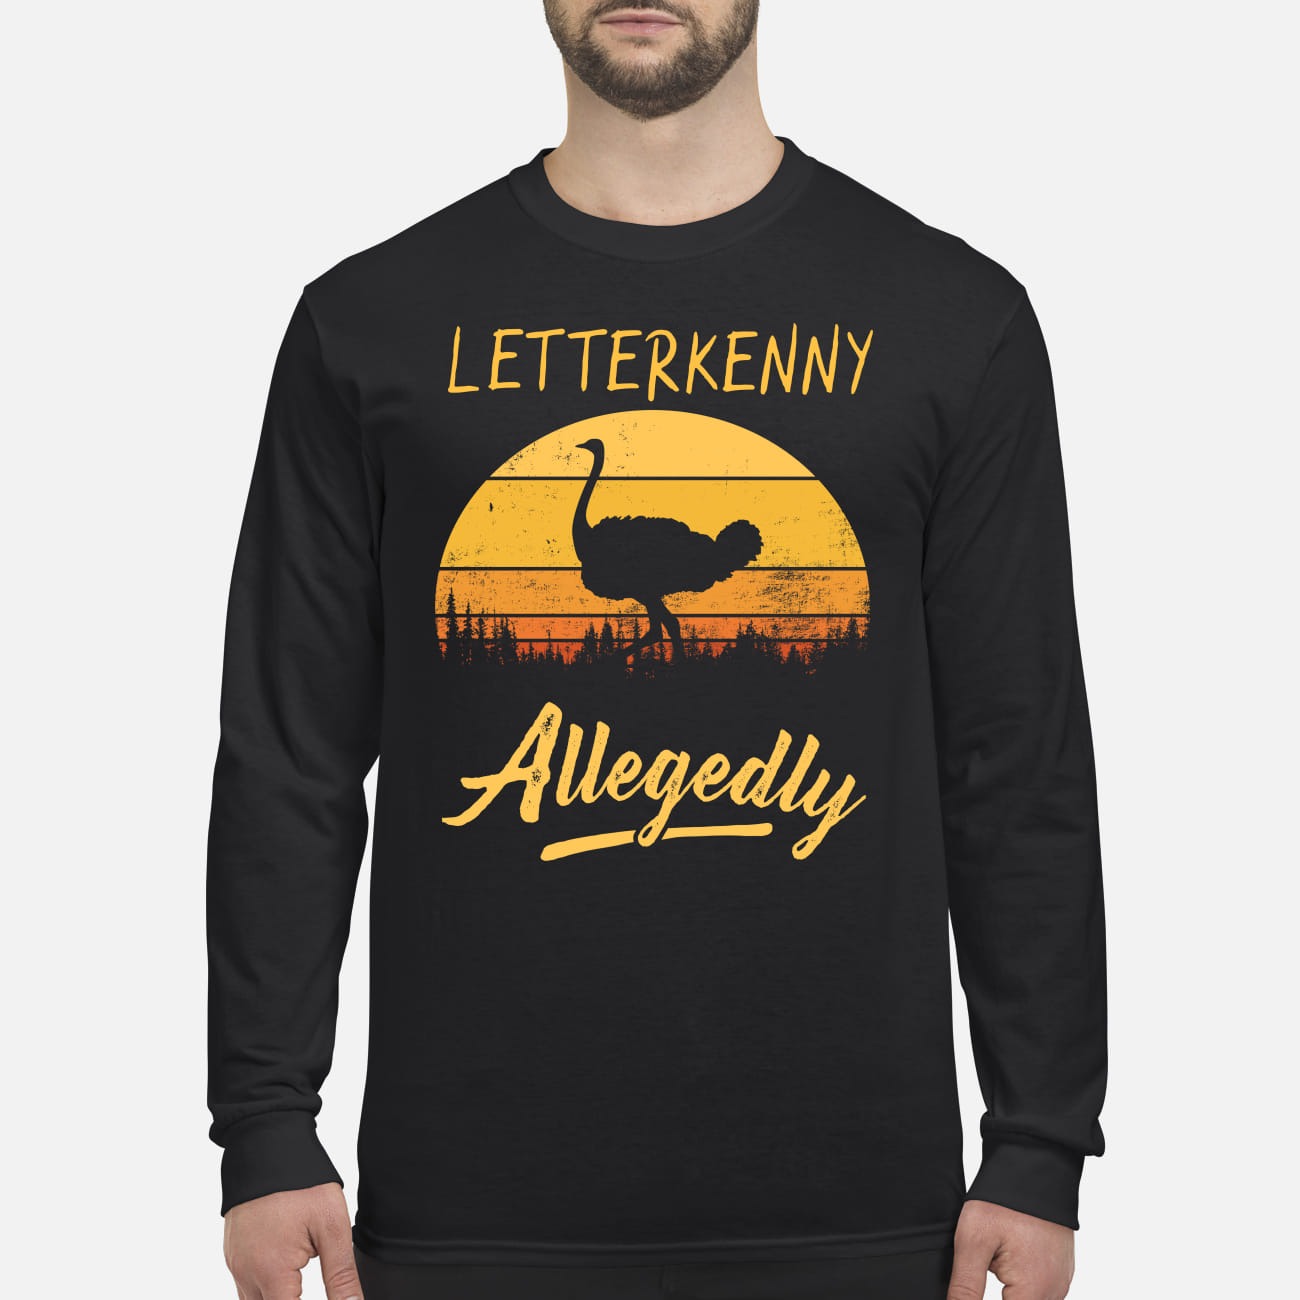 Ostrich Letterkenny allegedly men's long sleeved shirt